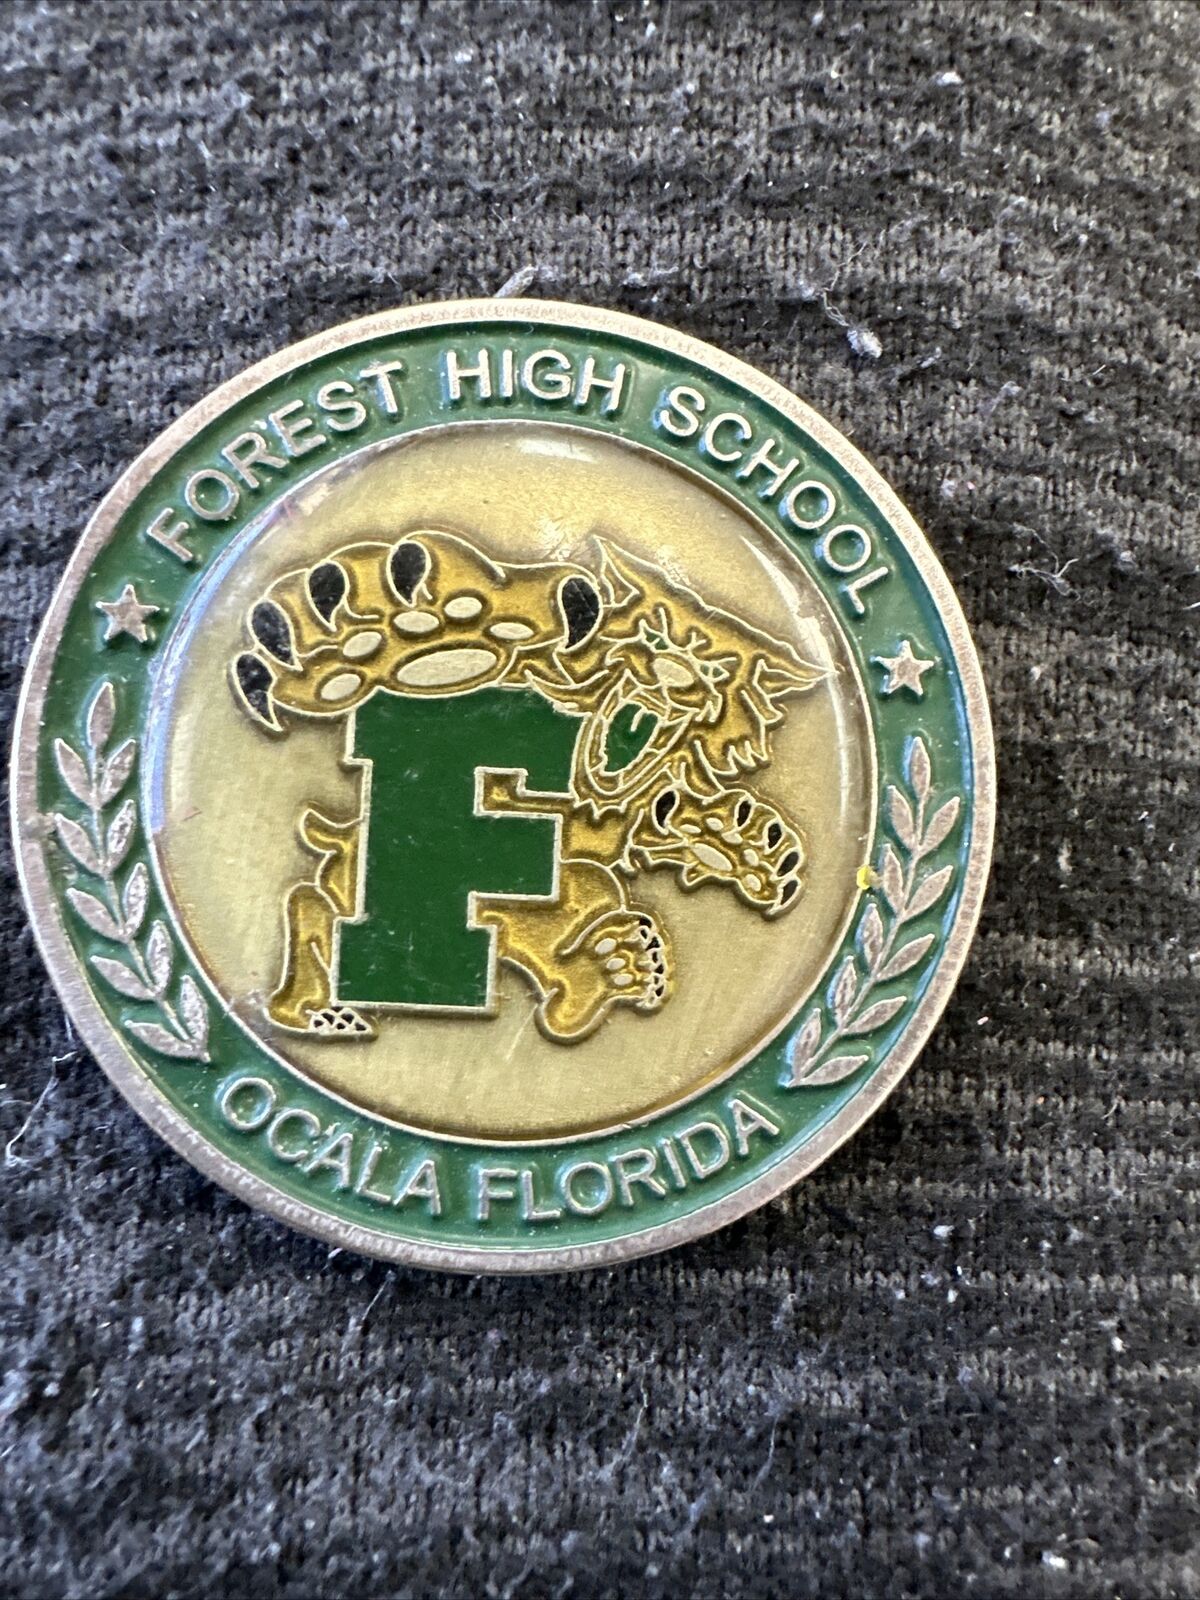 Vintage Forest High School OcALA Florida Token Above All FL931ST